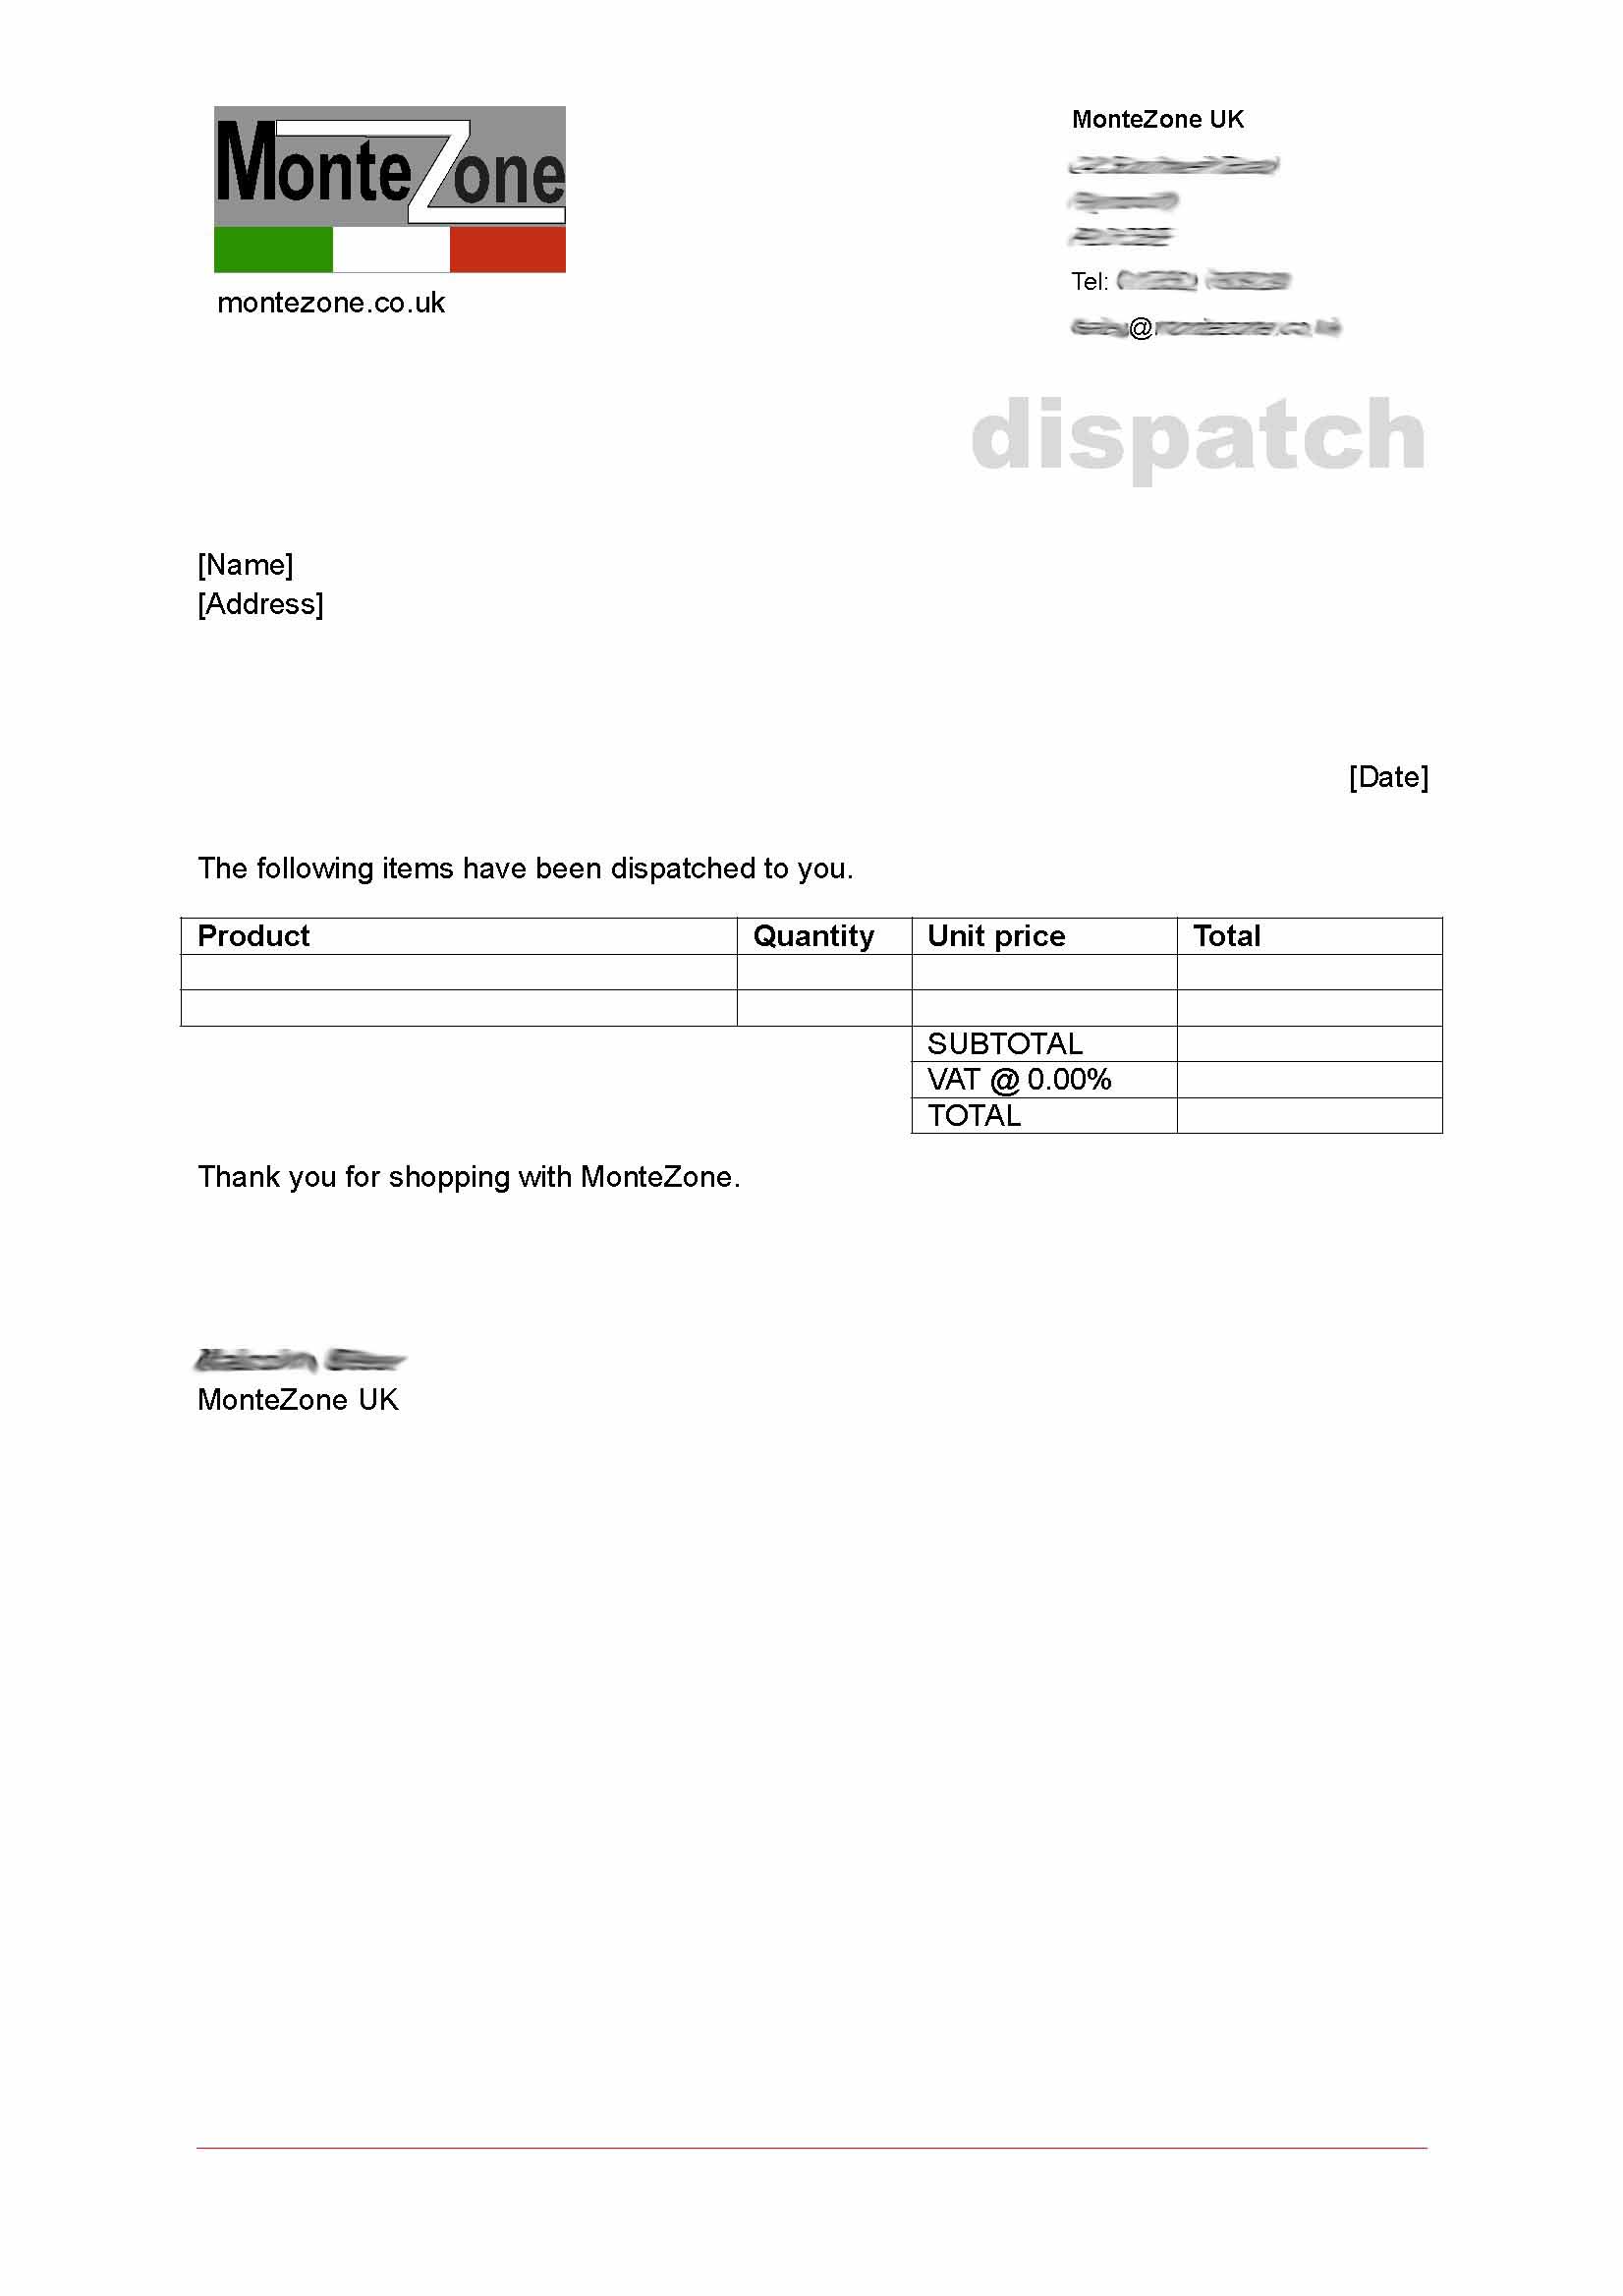 Montezone UK stationery (dispatch note)